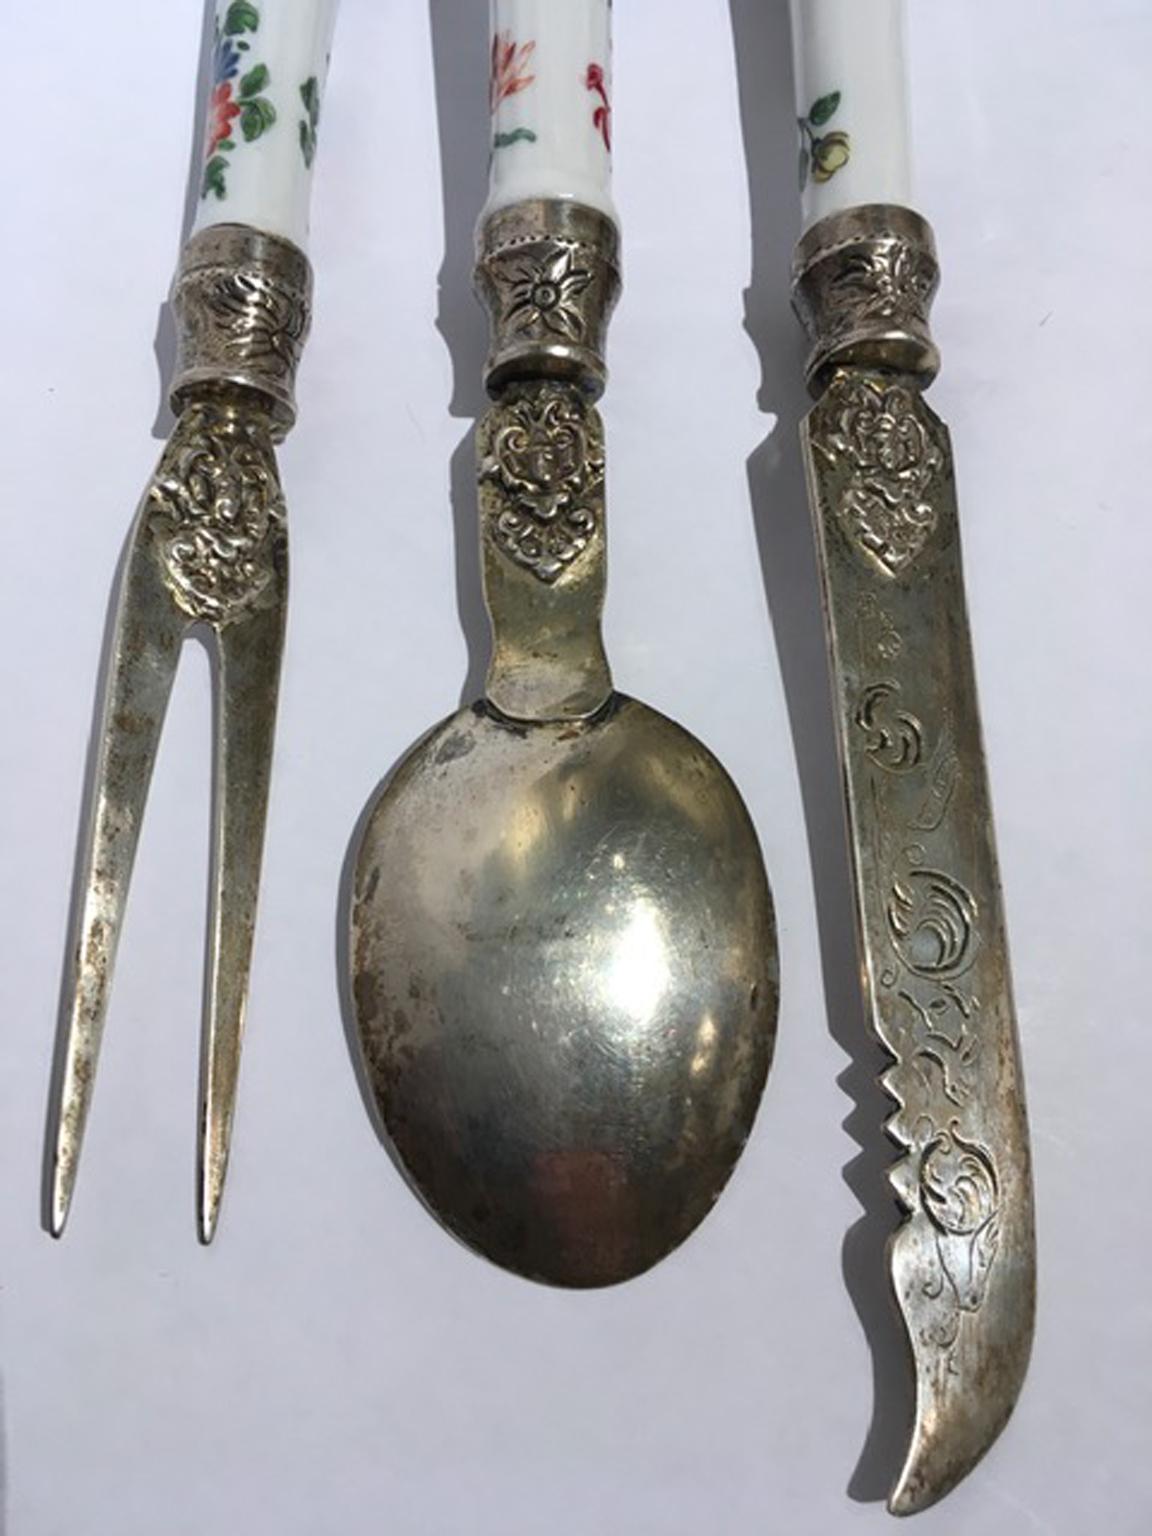 18th century cutlery